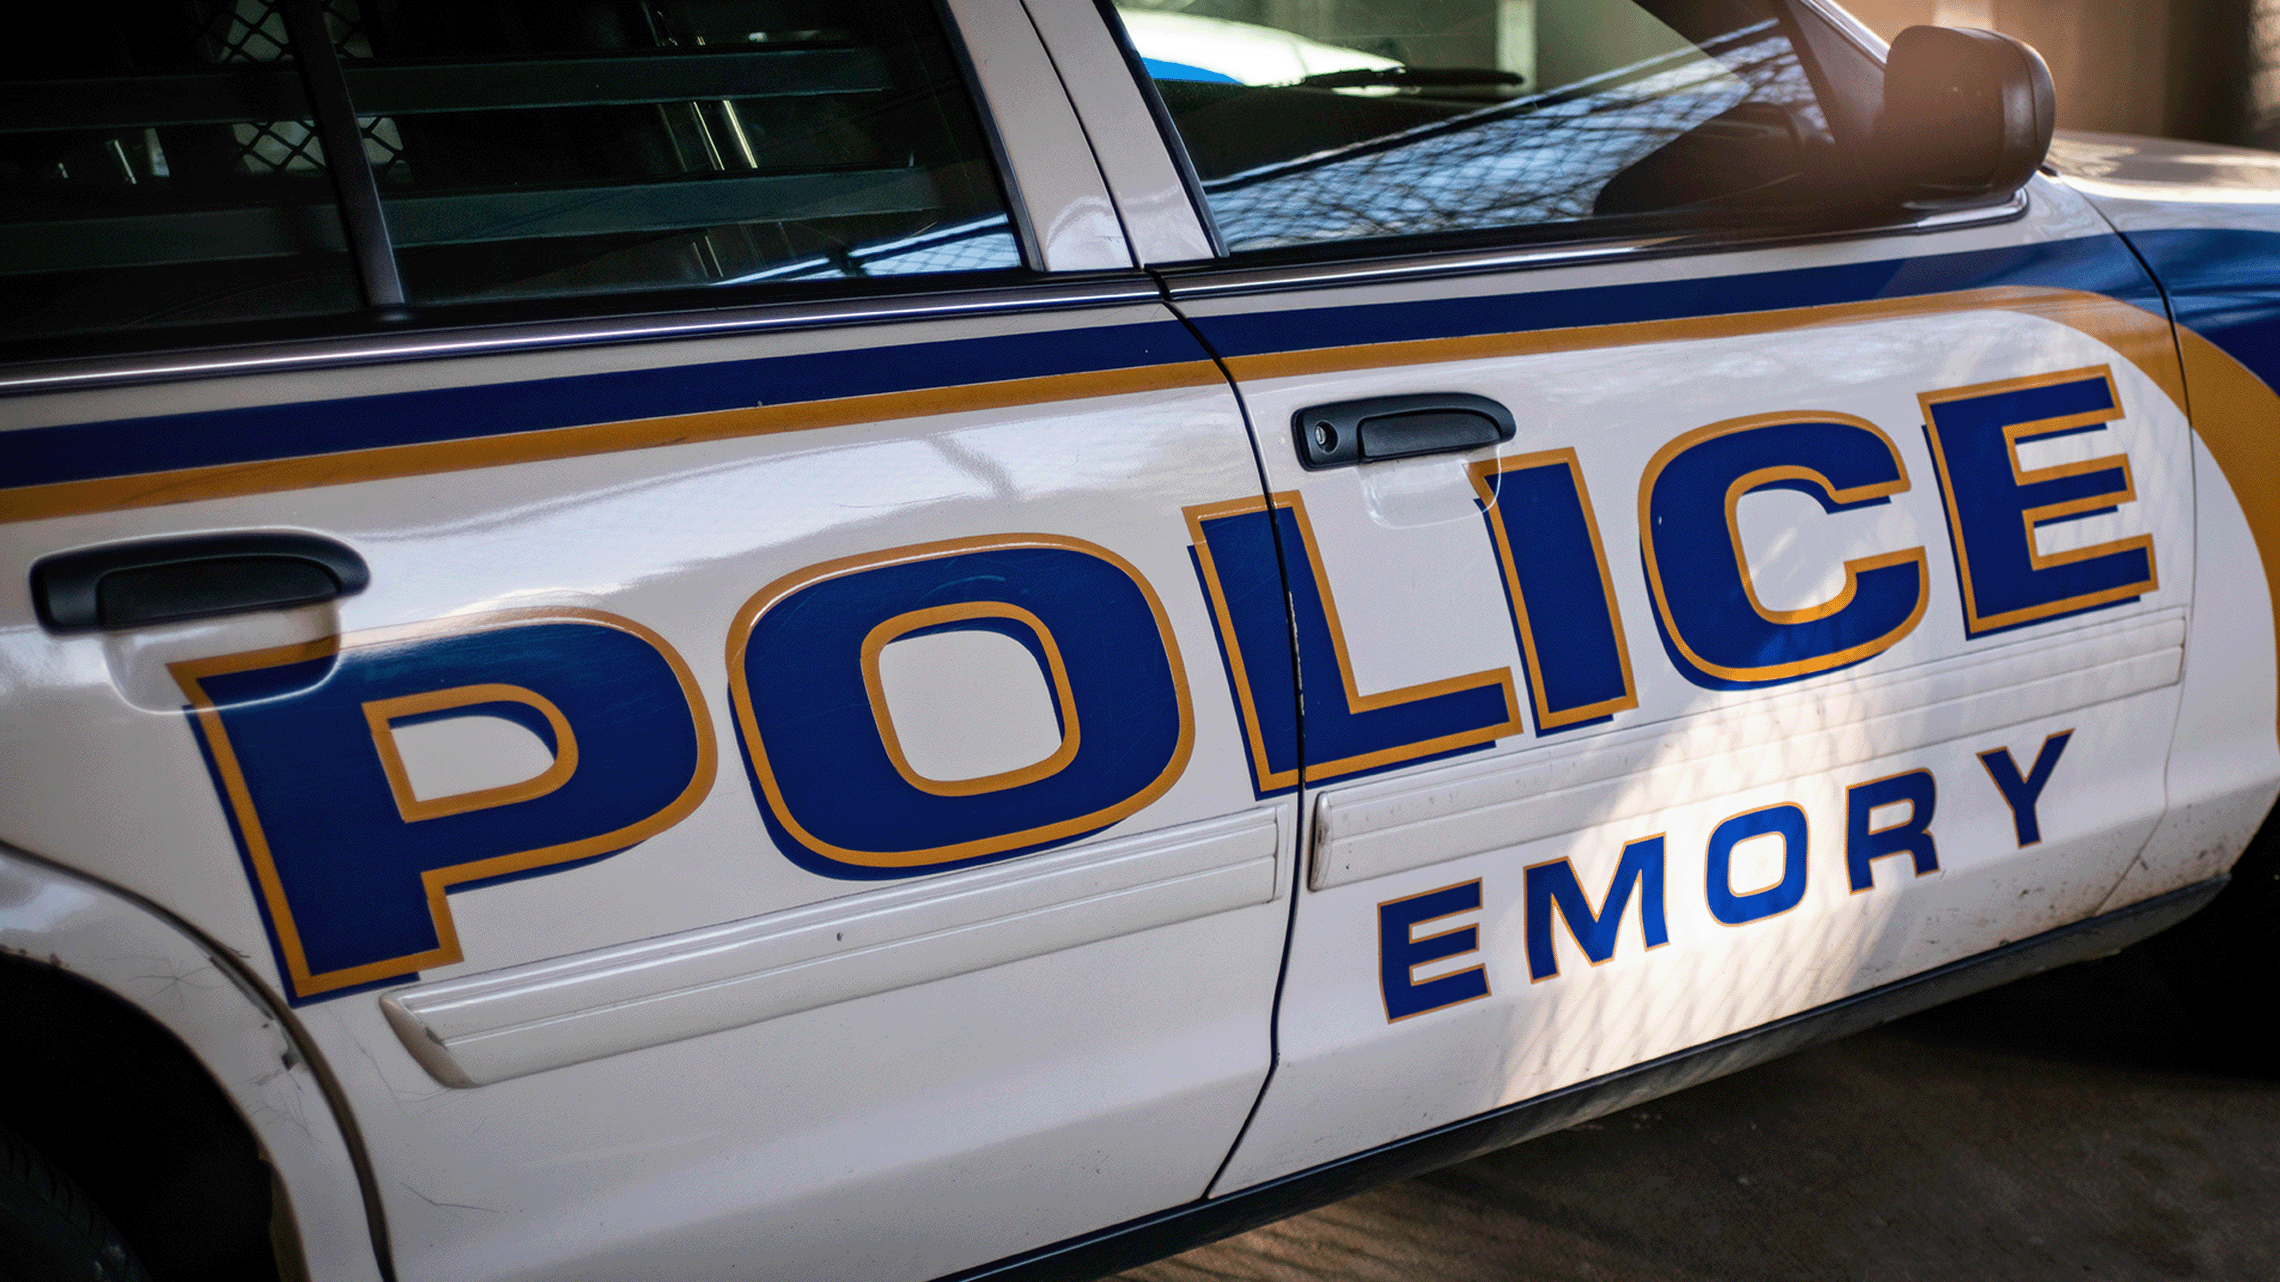 Emory Police Department cruiser